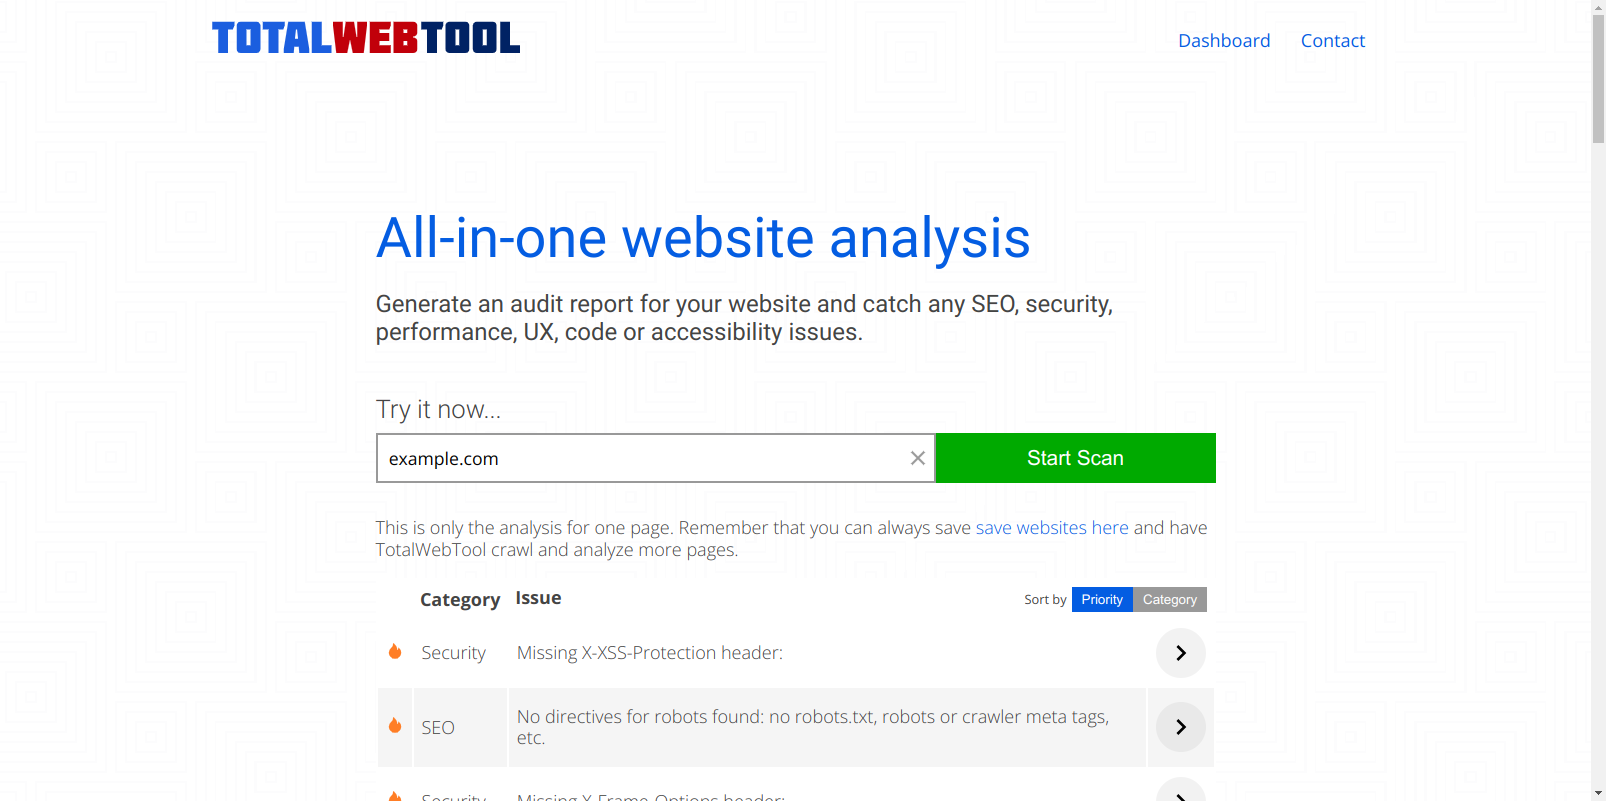 TotalWebTool homepage